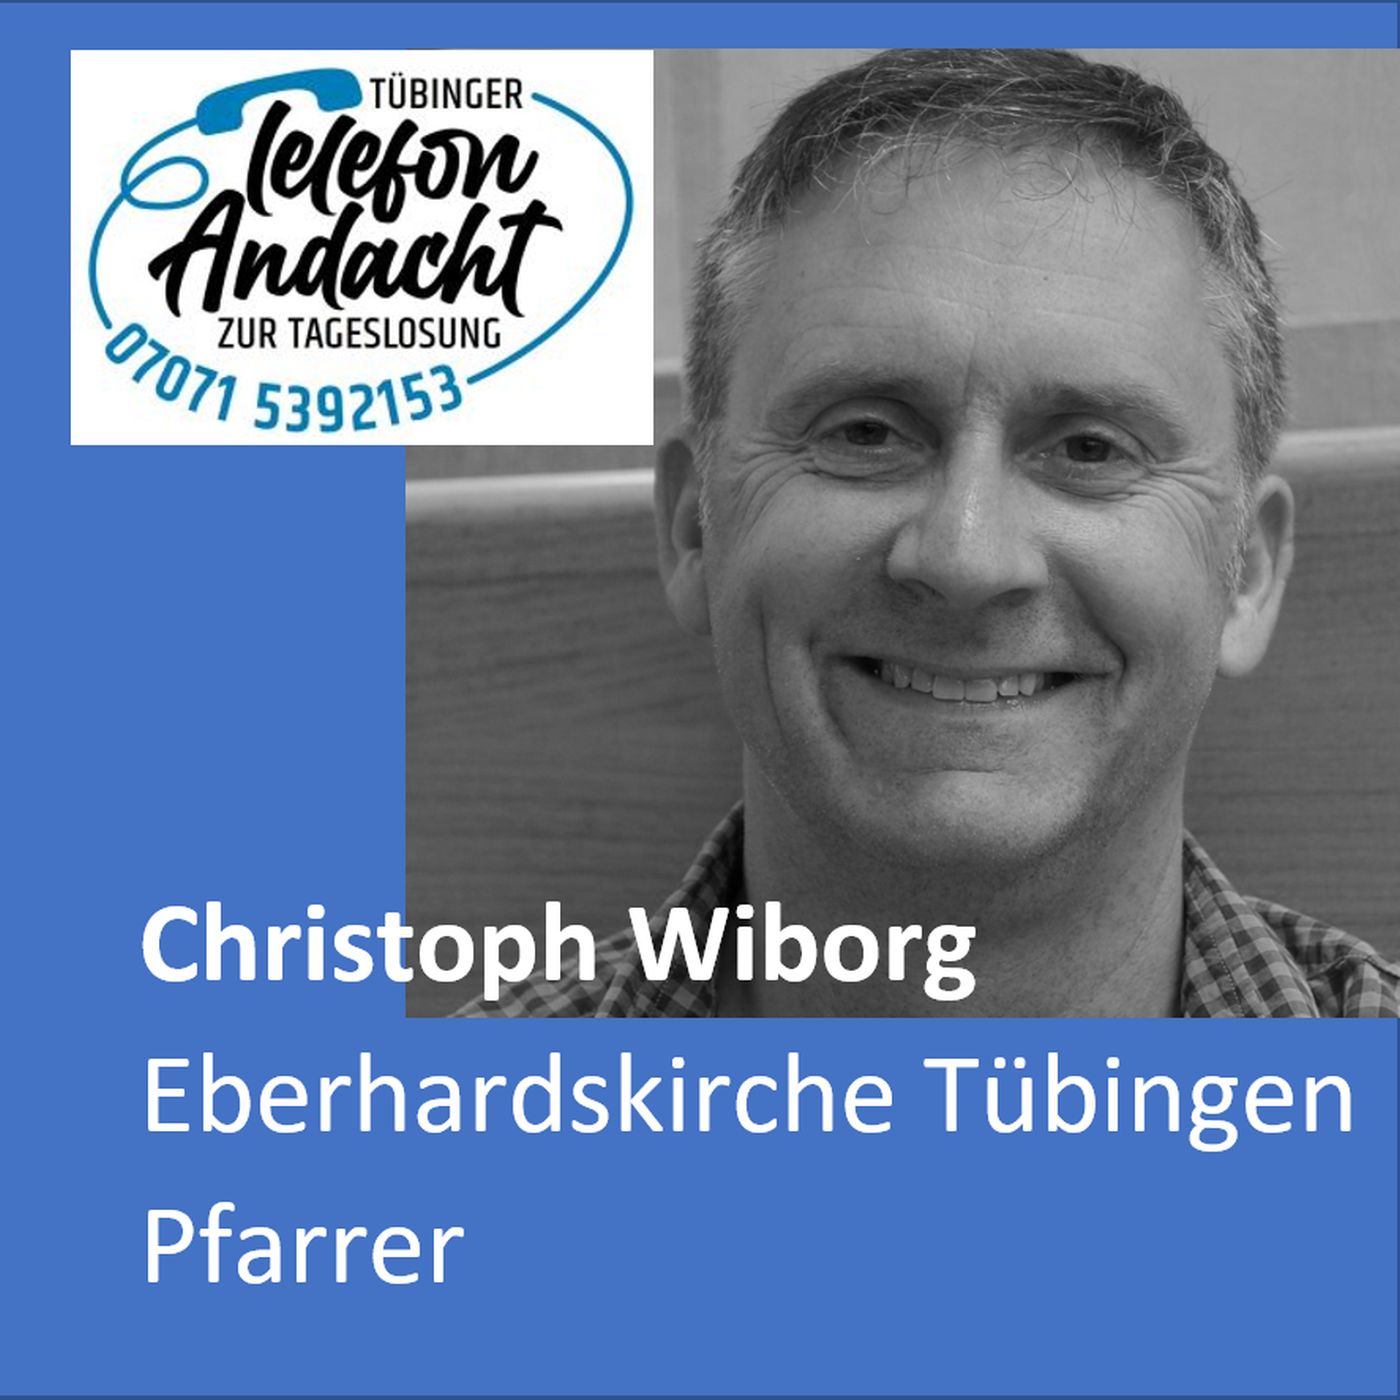 24 04 21 Christoph Wiborg